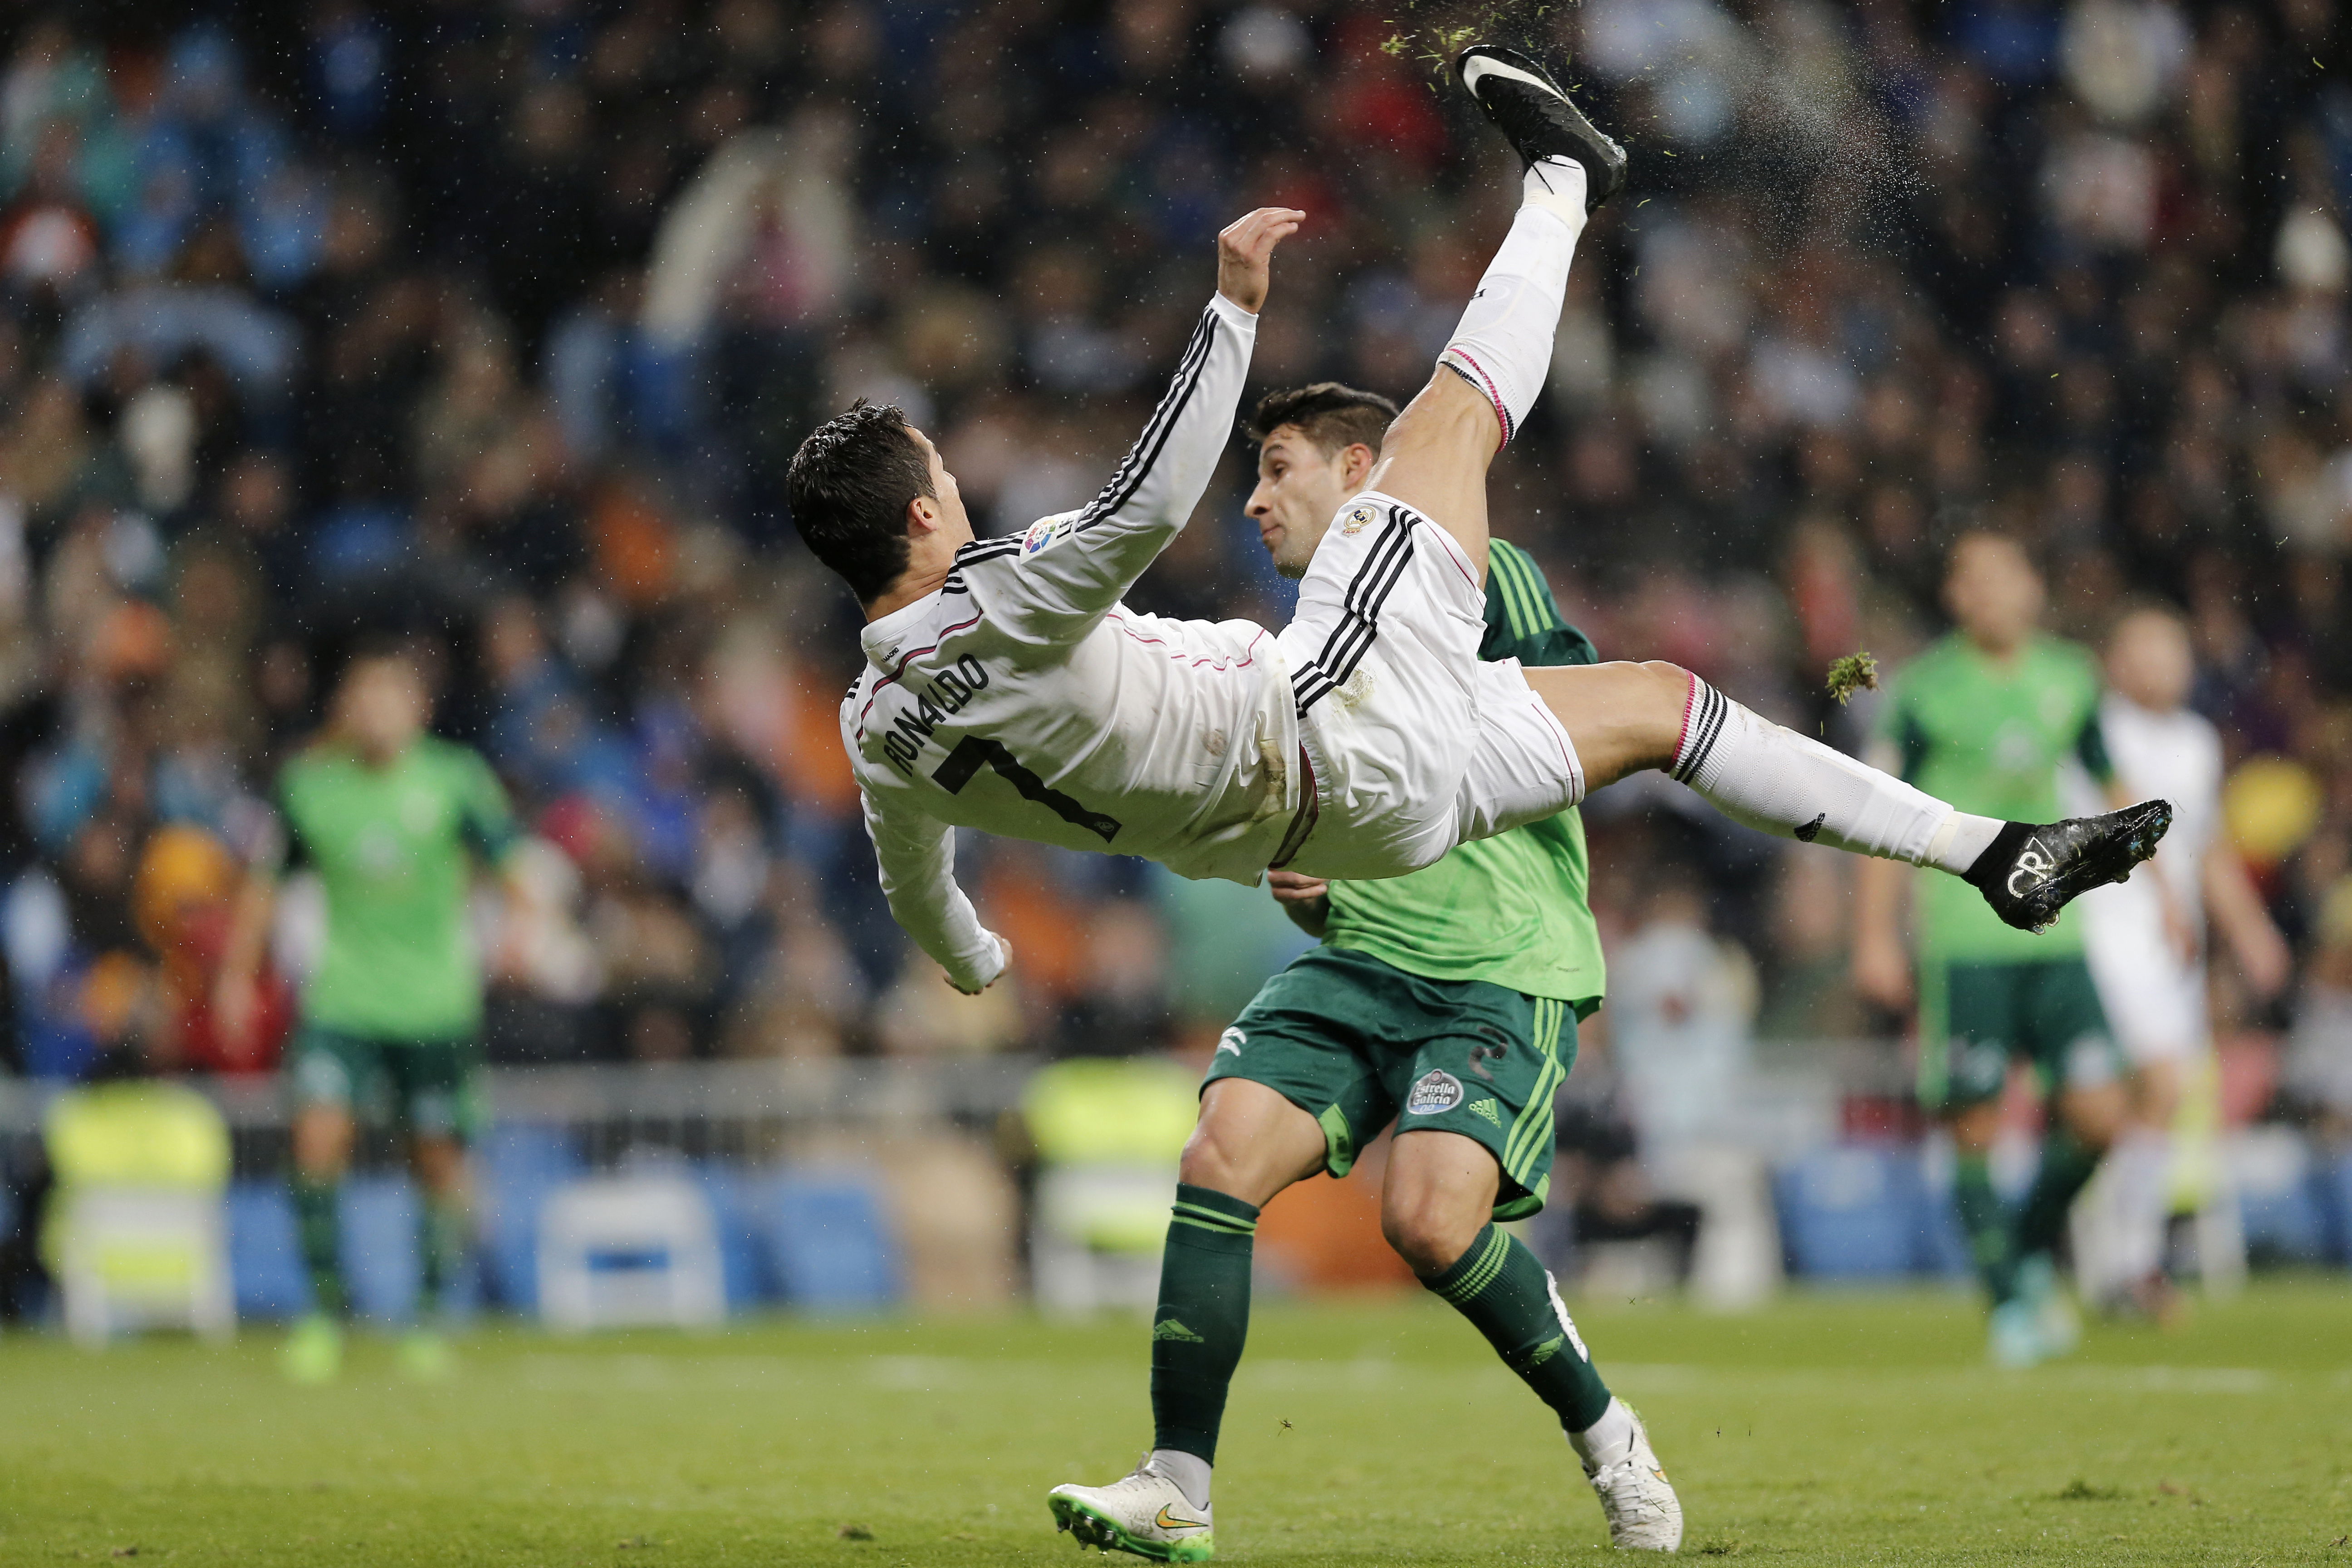 Campeones: Real Madrid-Shalke, Barsa-Man City